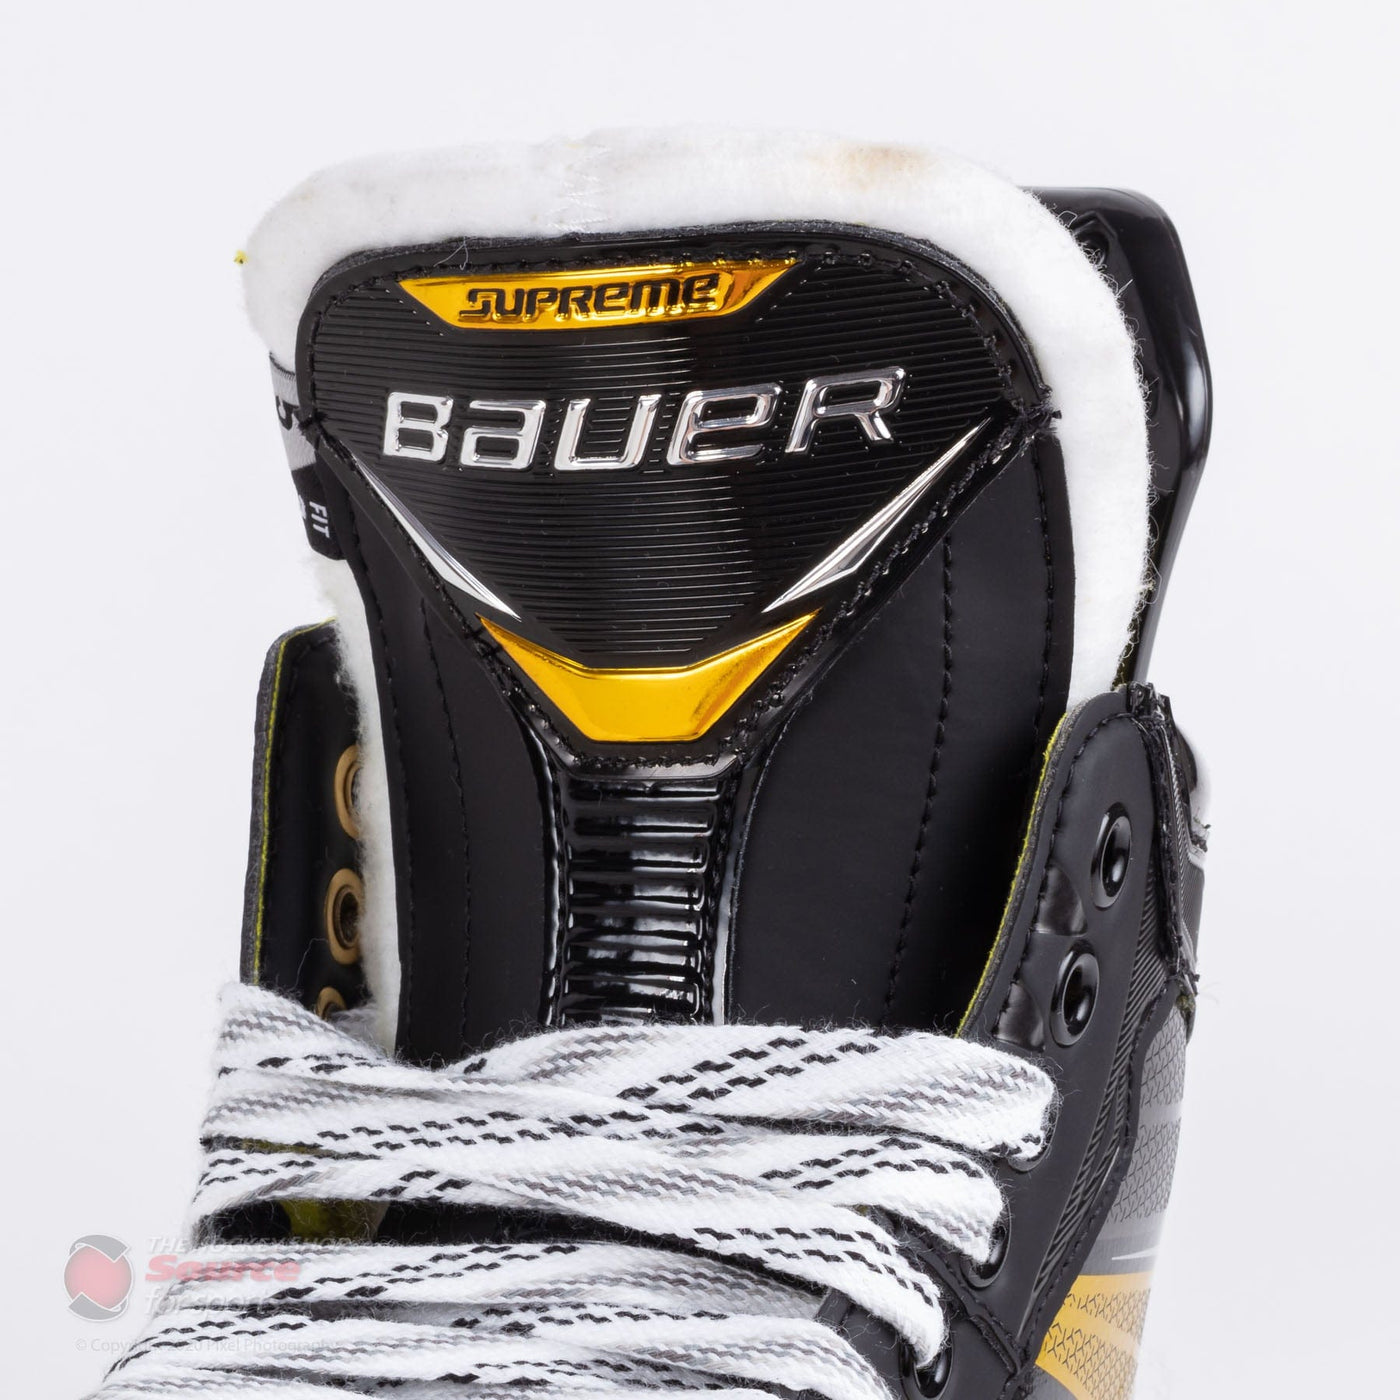 Bauer Supreme 3S Pro Intermediate Hockey Skates